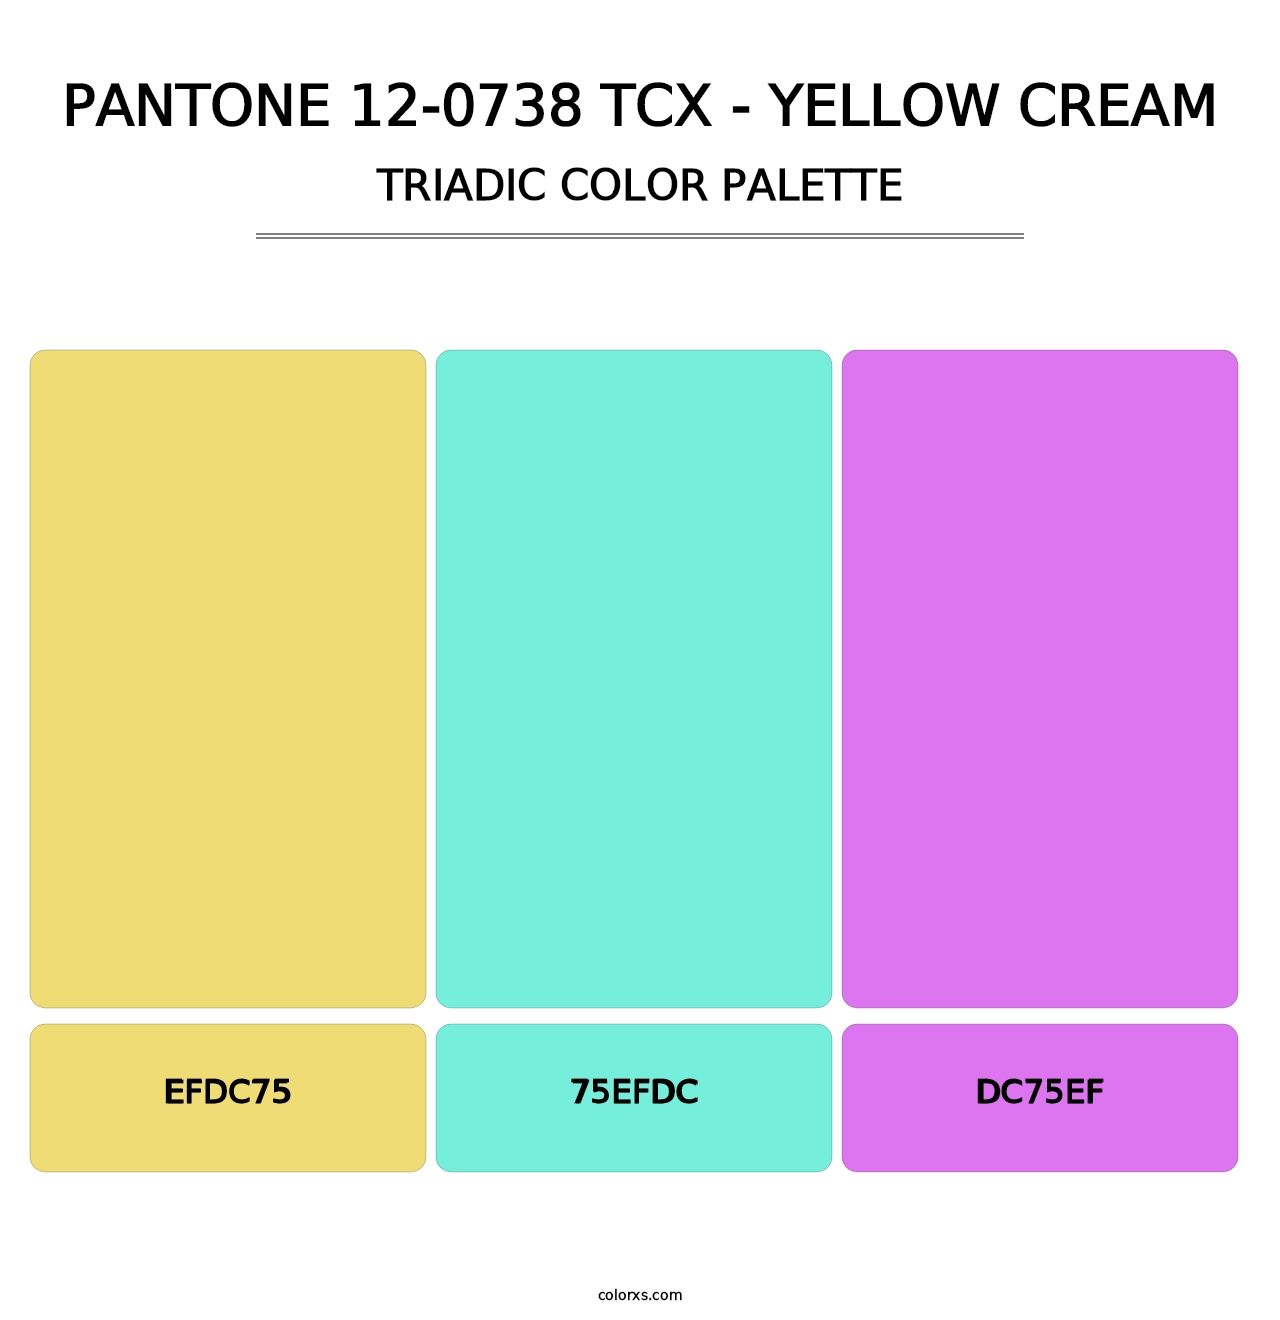 PANTONE 12-0738 TCX - Yellow Cream - Triadic Color Palette